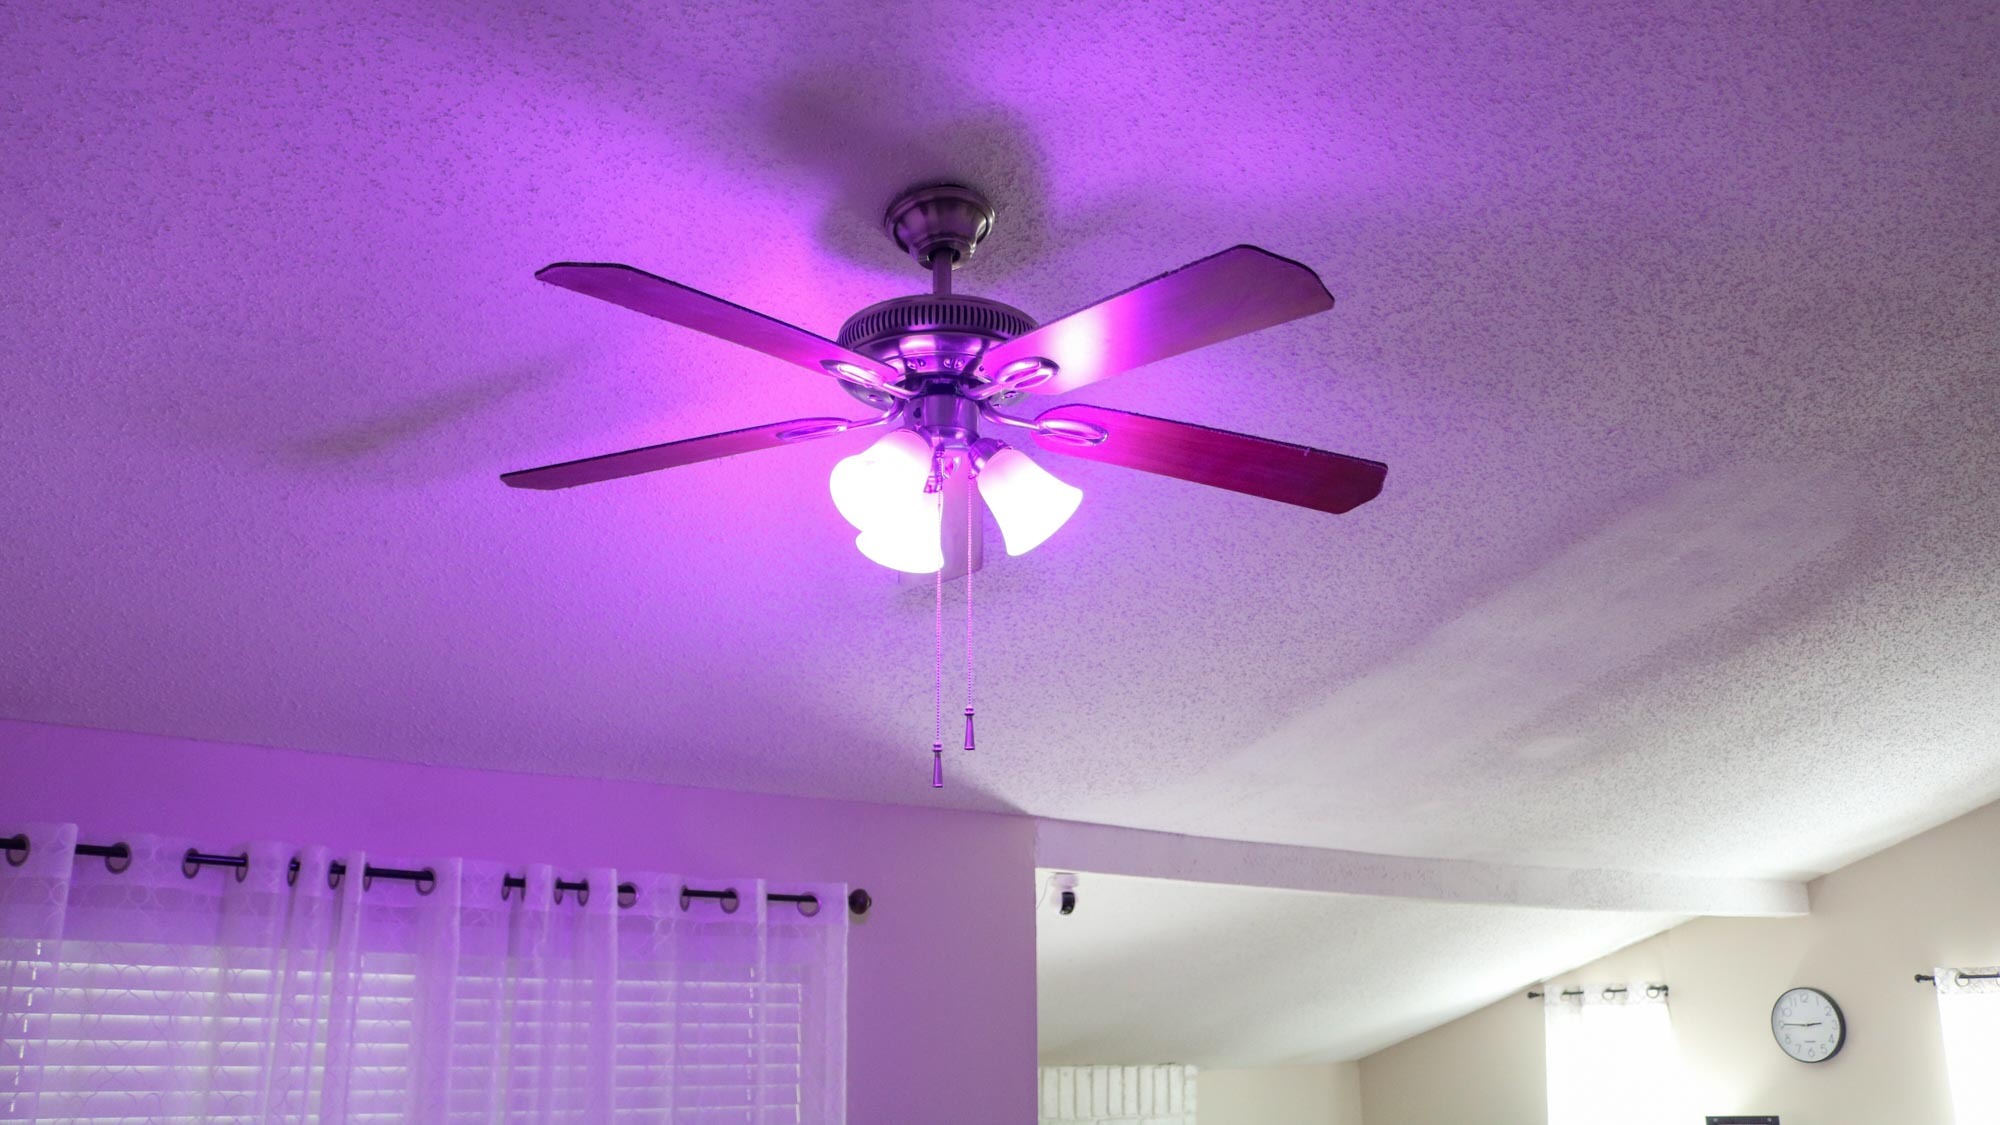 Three colored smart light bulbs in a ceiling fan